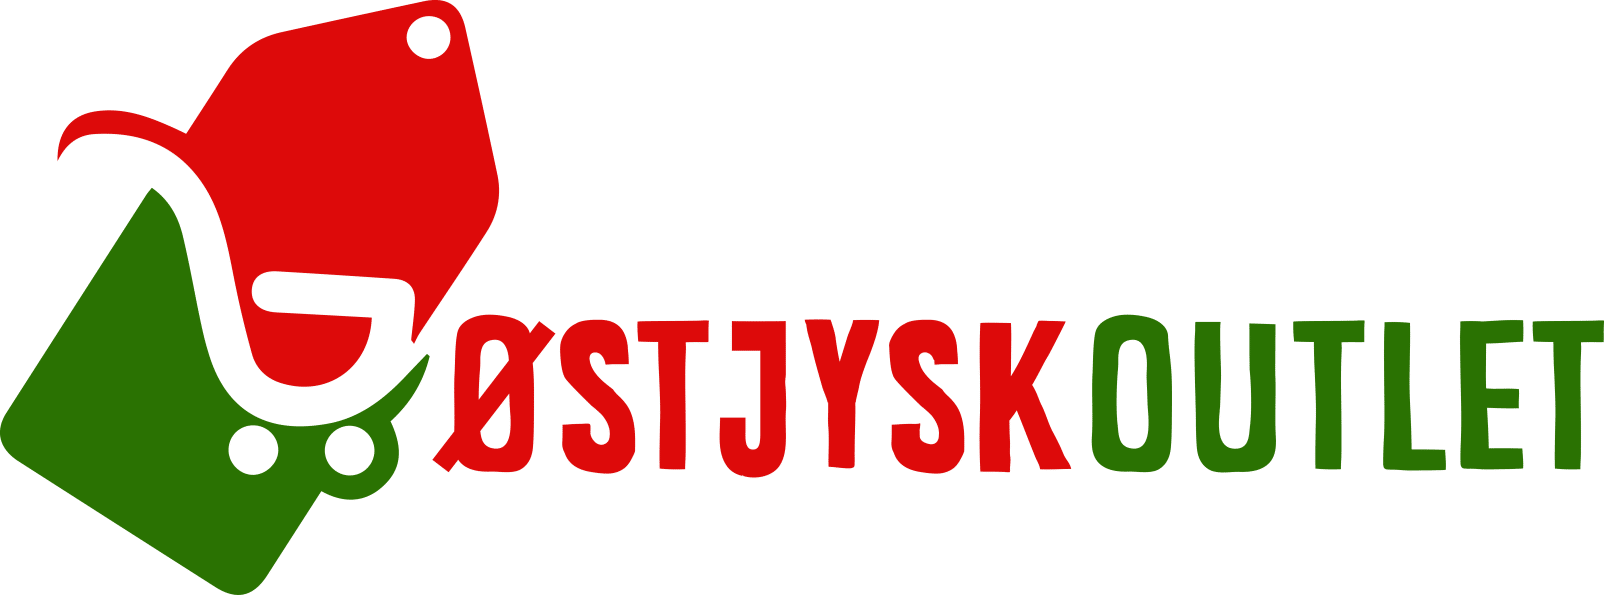 Østjysk Outlet logo - Lokaler i E-hub, odder